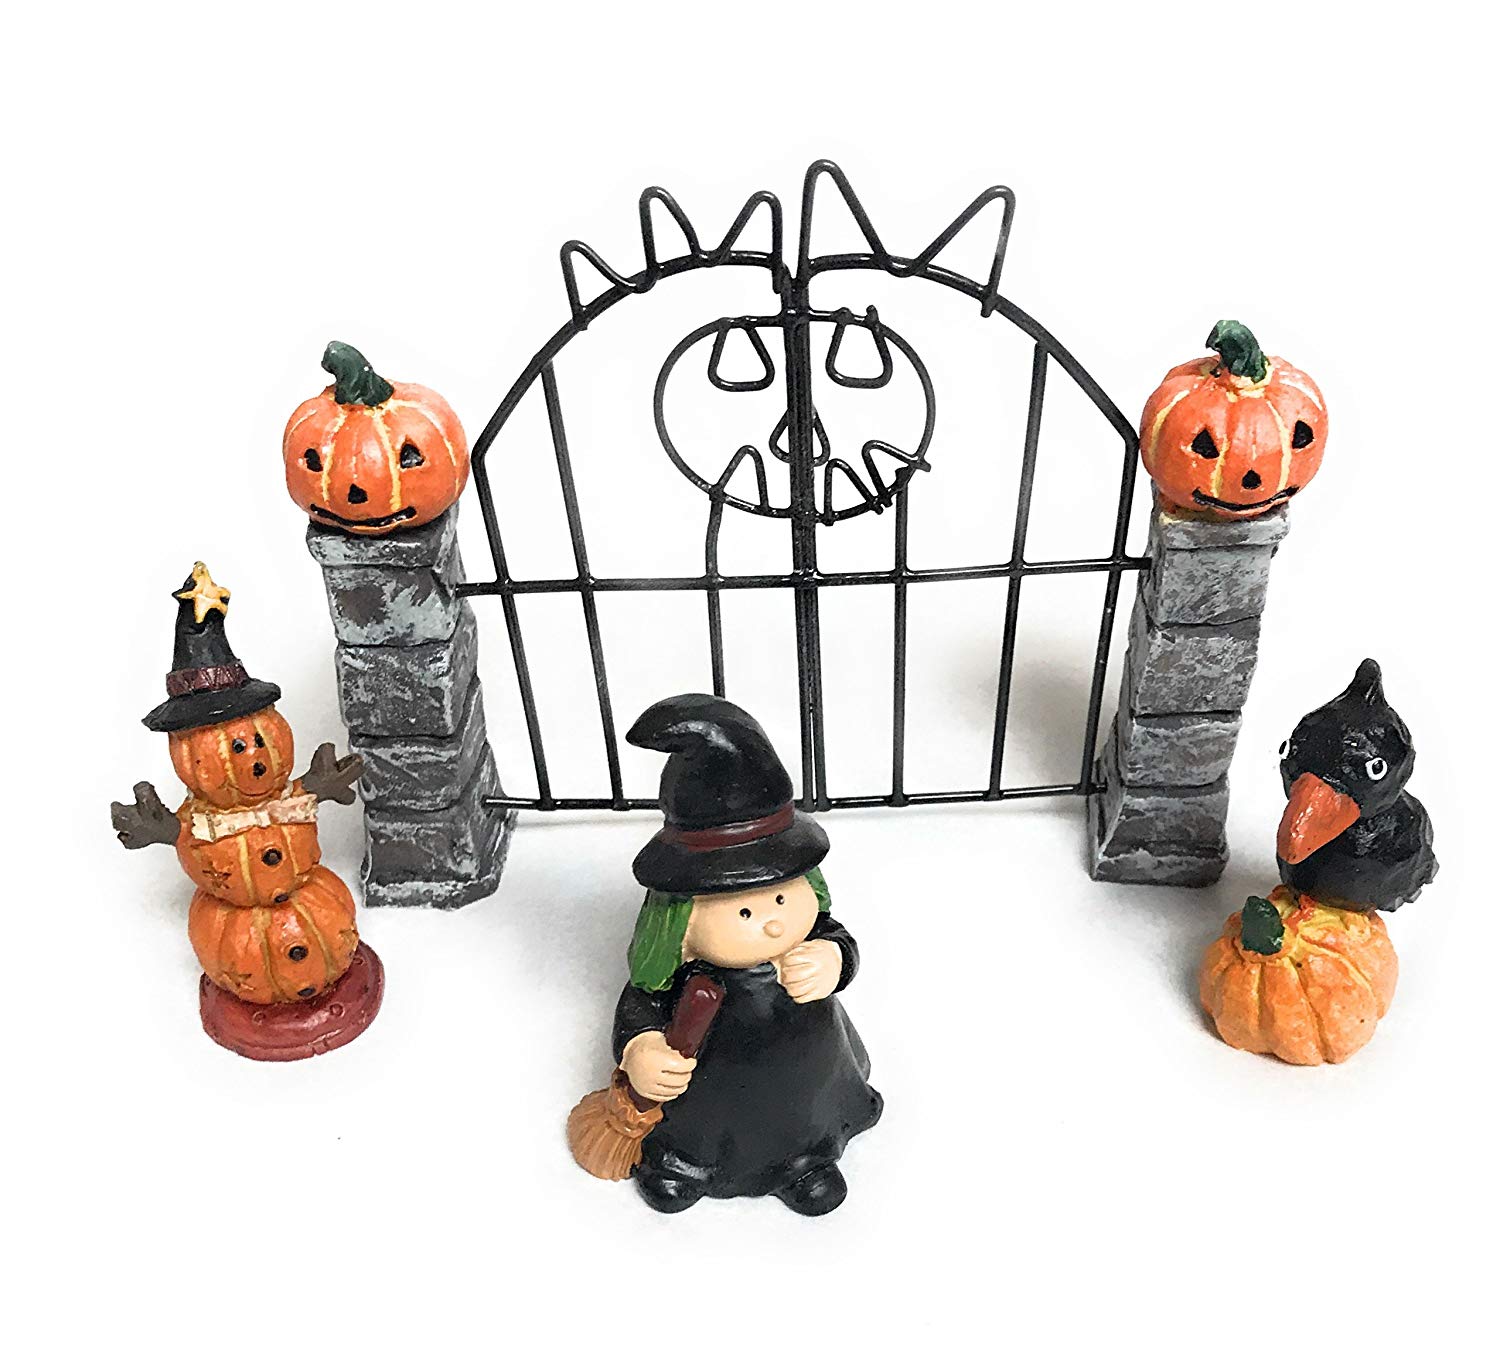 1 nautical crush trading halloween assortment, miniature fence with witch, pumpkin man, and black bird fairy garden miniature kit, amazon